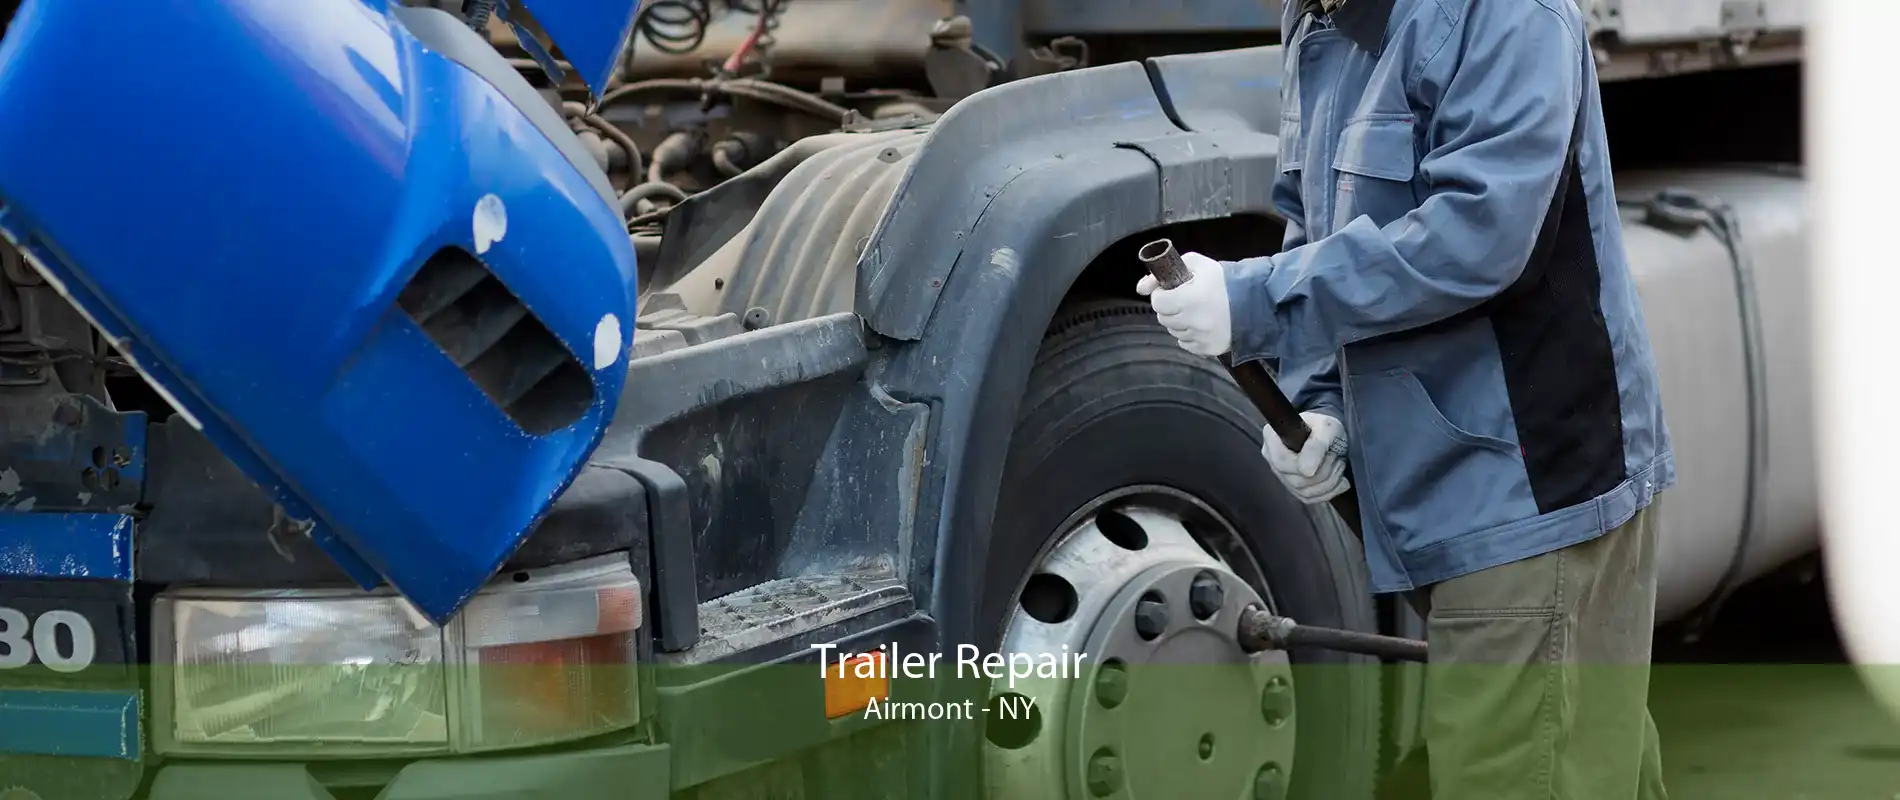 Trailer Repair Airmont - NY